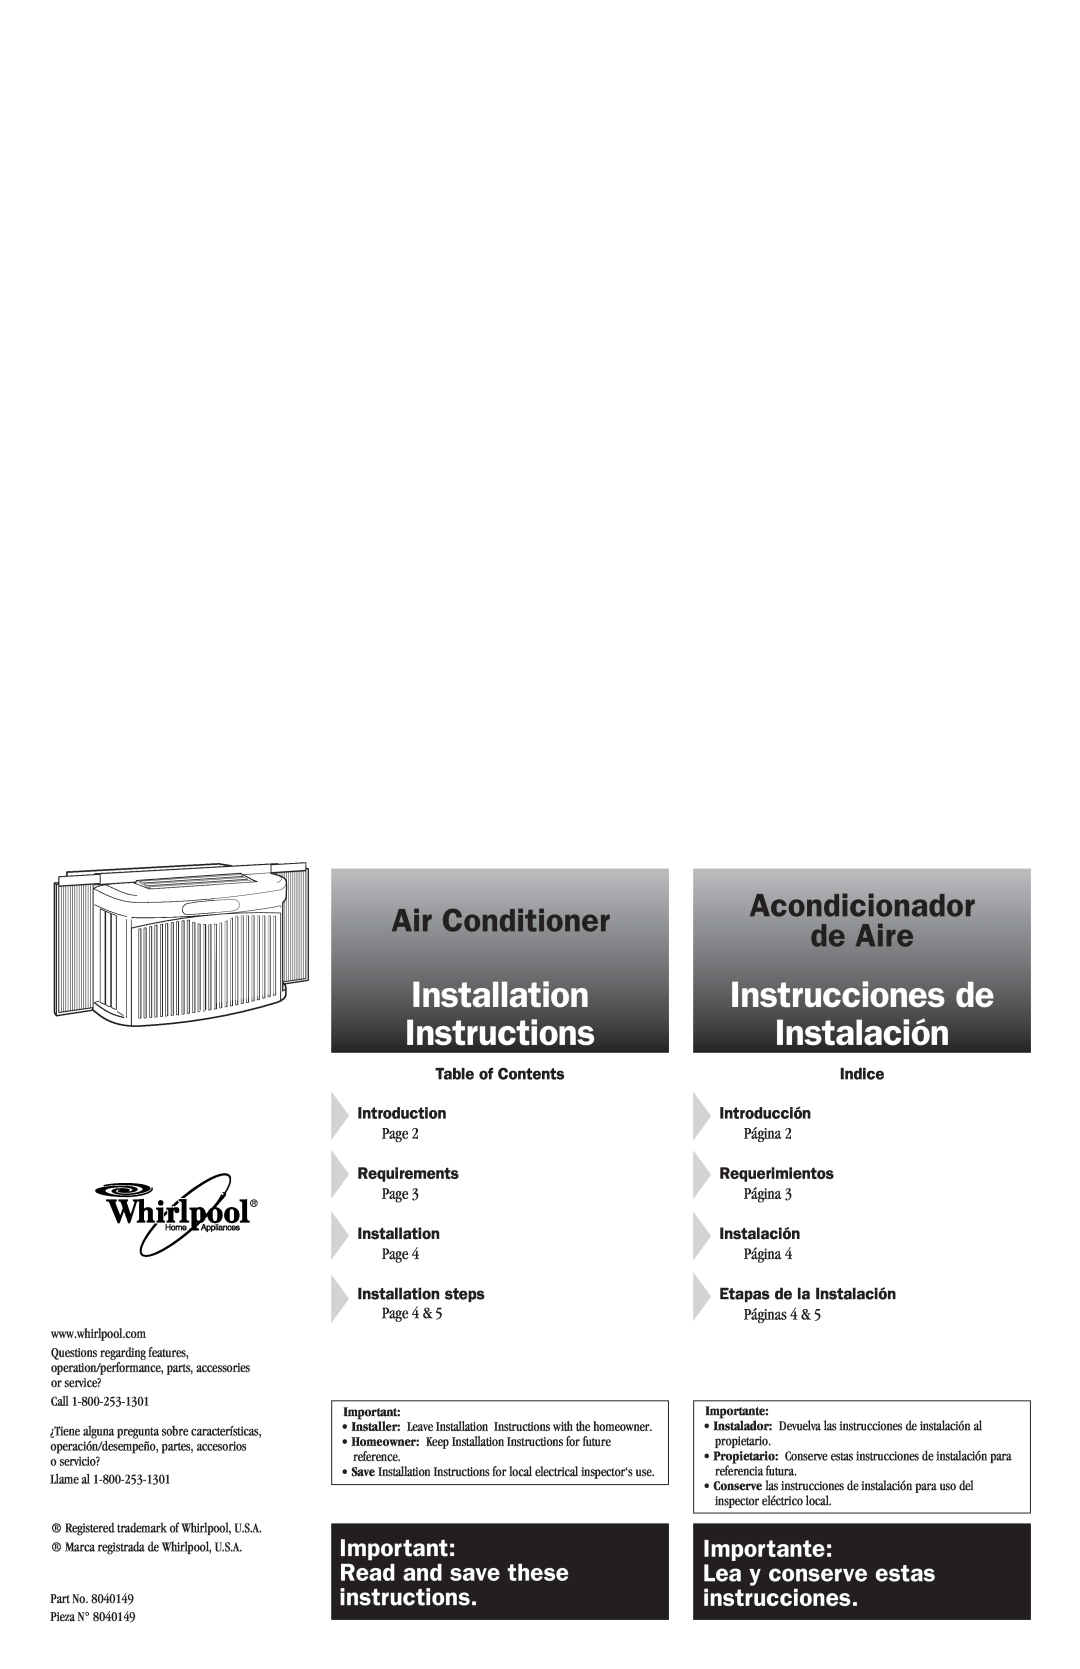 Whirlpool ACG052XJ0 Table of Contents Introduction, Requirements, Installation steps, Indice Introducción, Instalación 